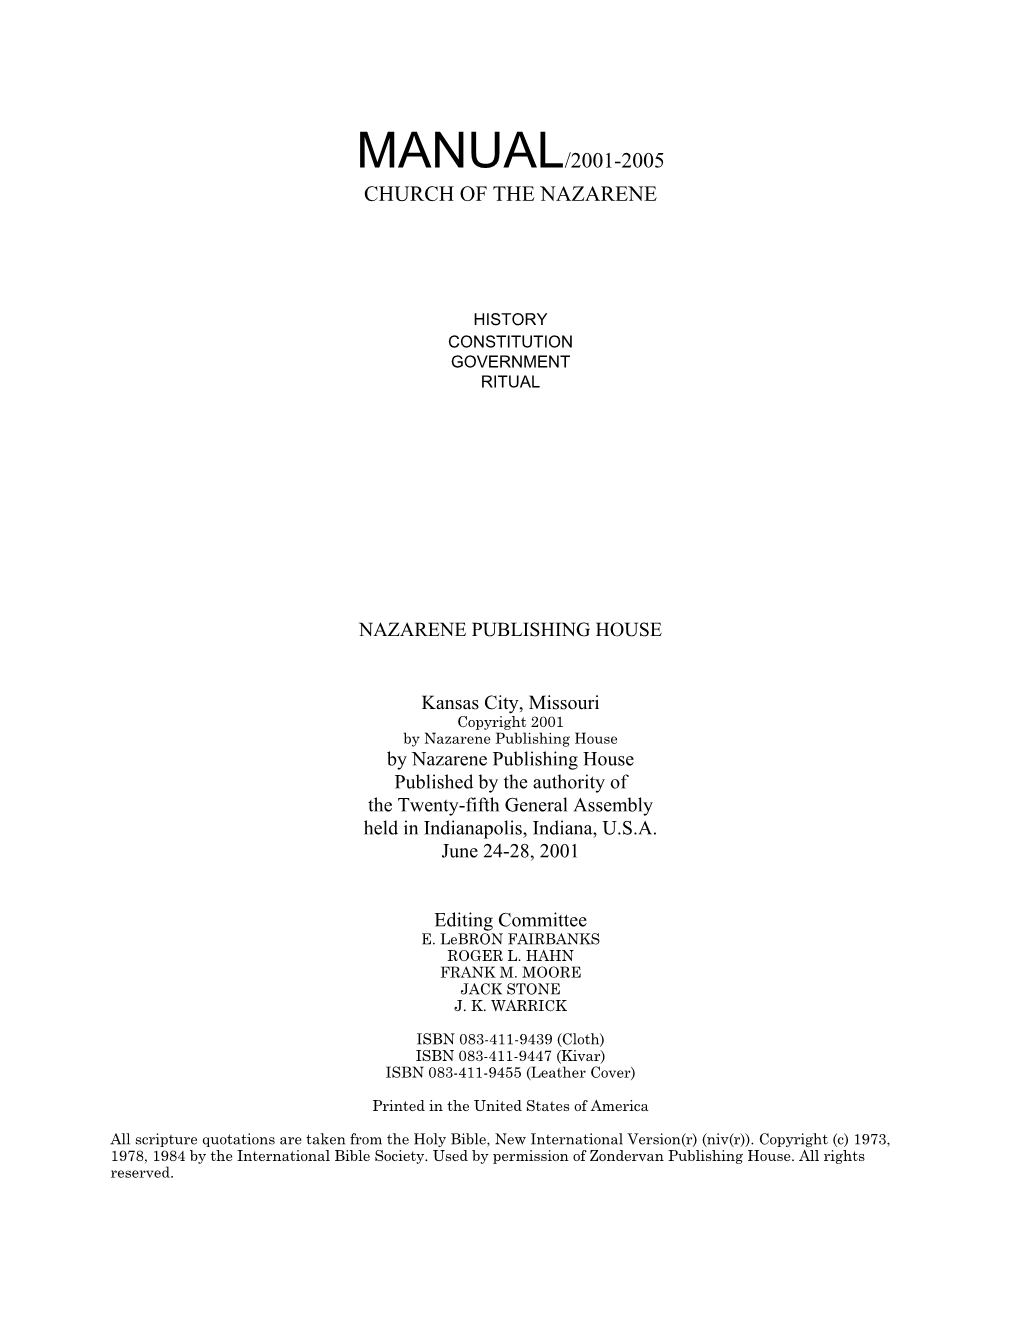 Manual/2001-2005 Church of the Nazarene